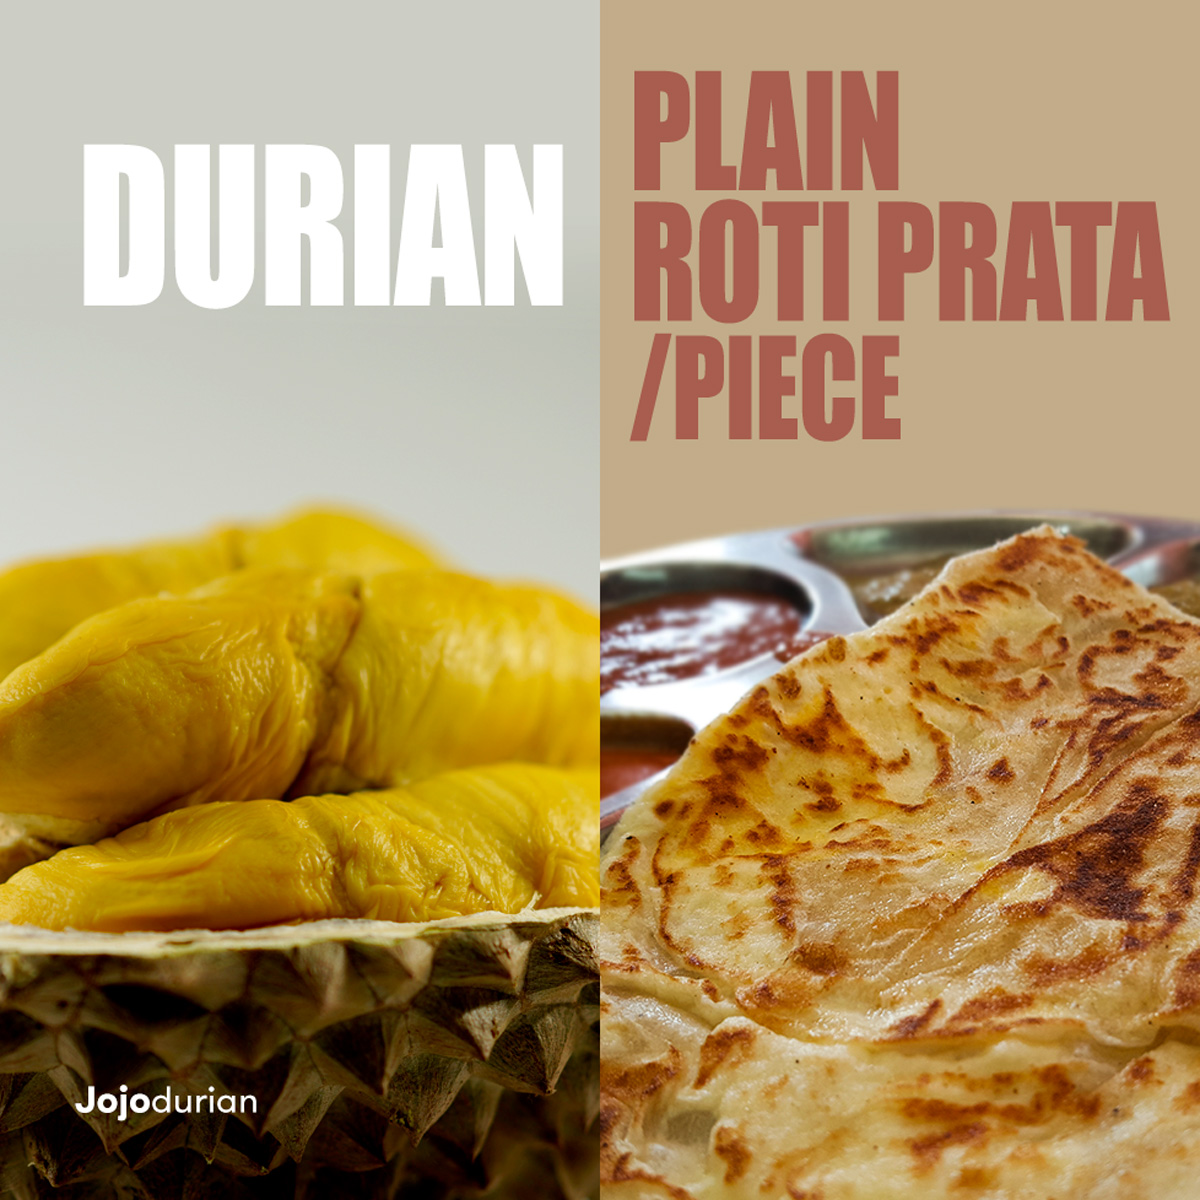 Meal Replacement: Durian vs Roti Prata